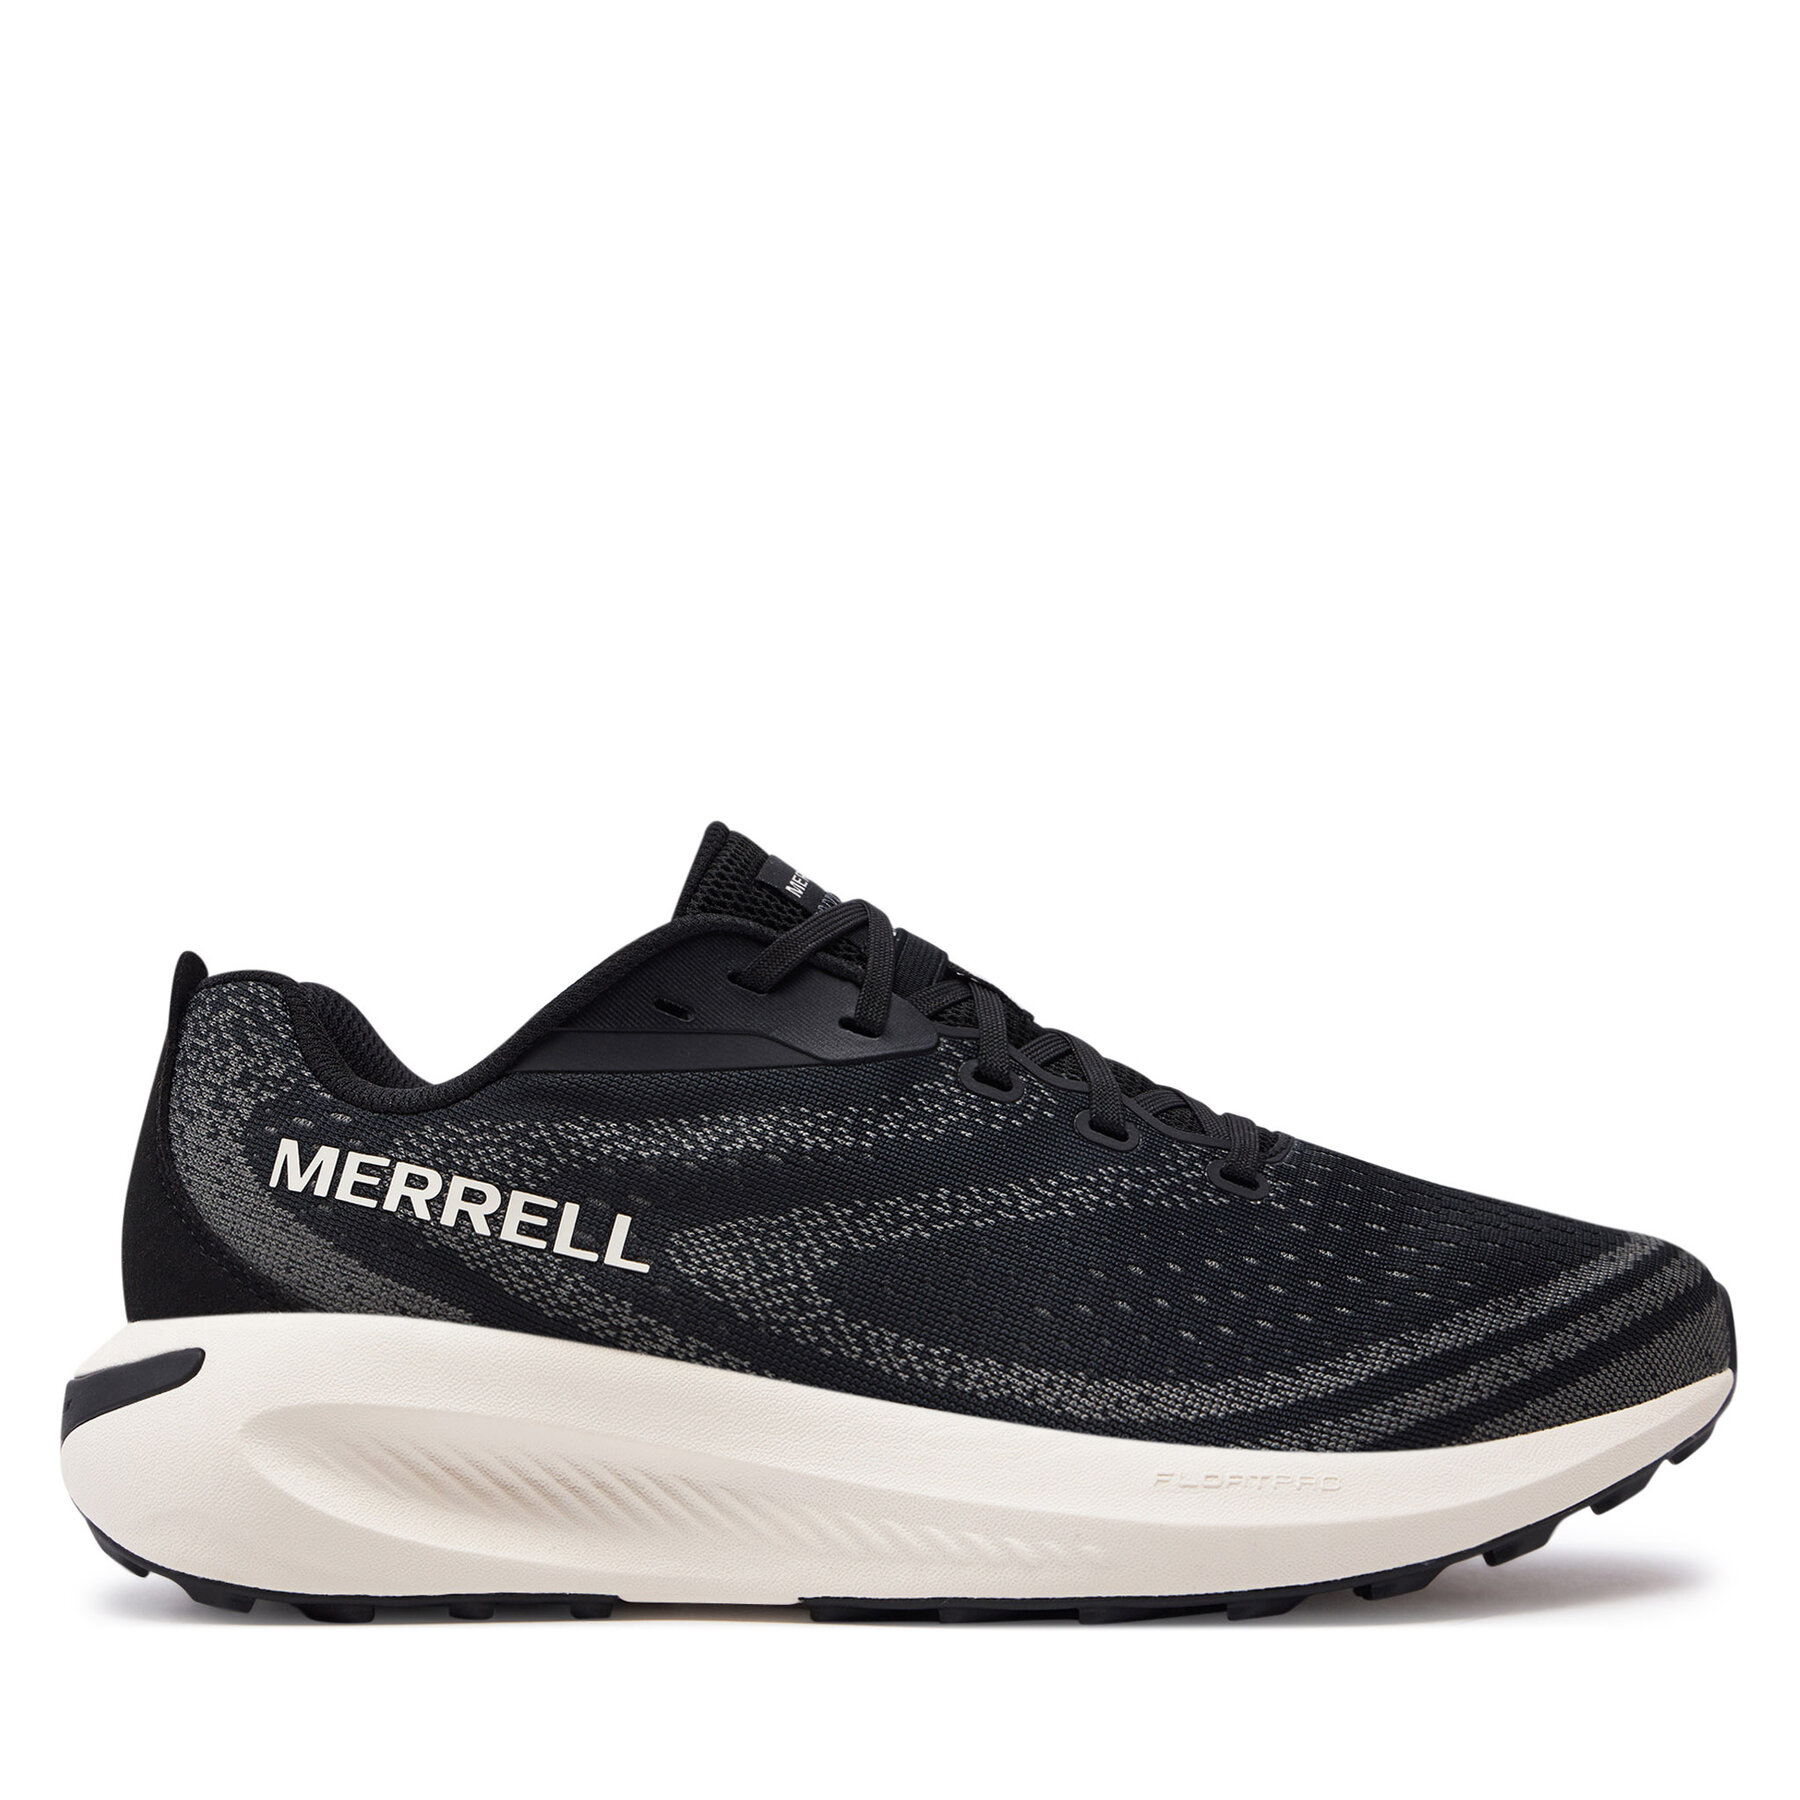 MERRELL MORPHLITE - Zapatos